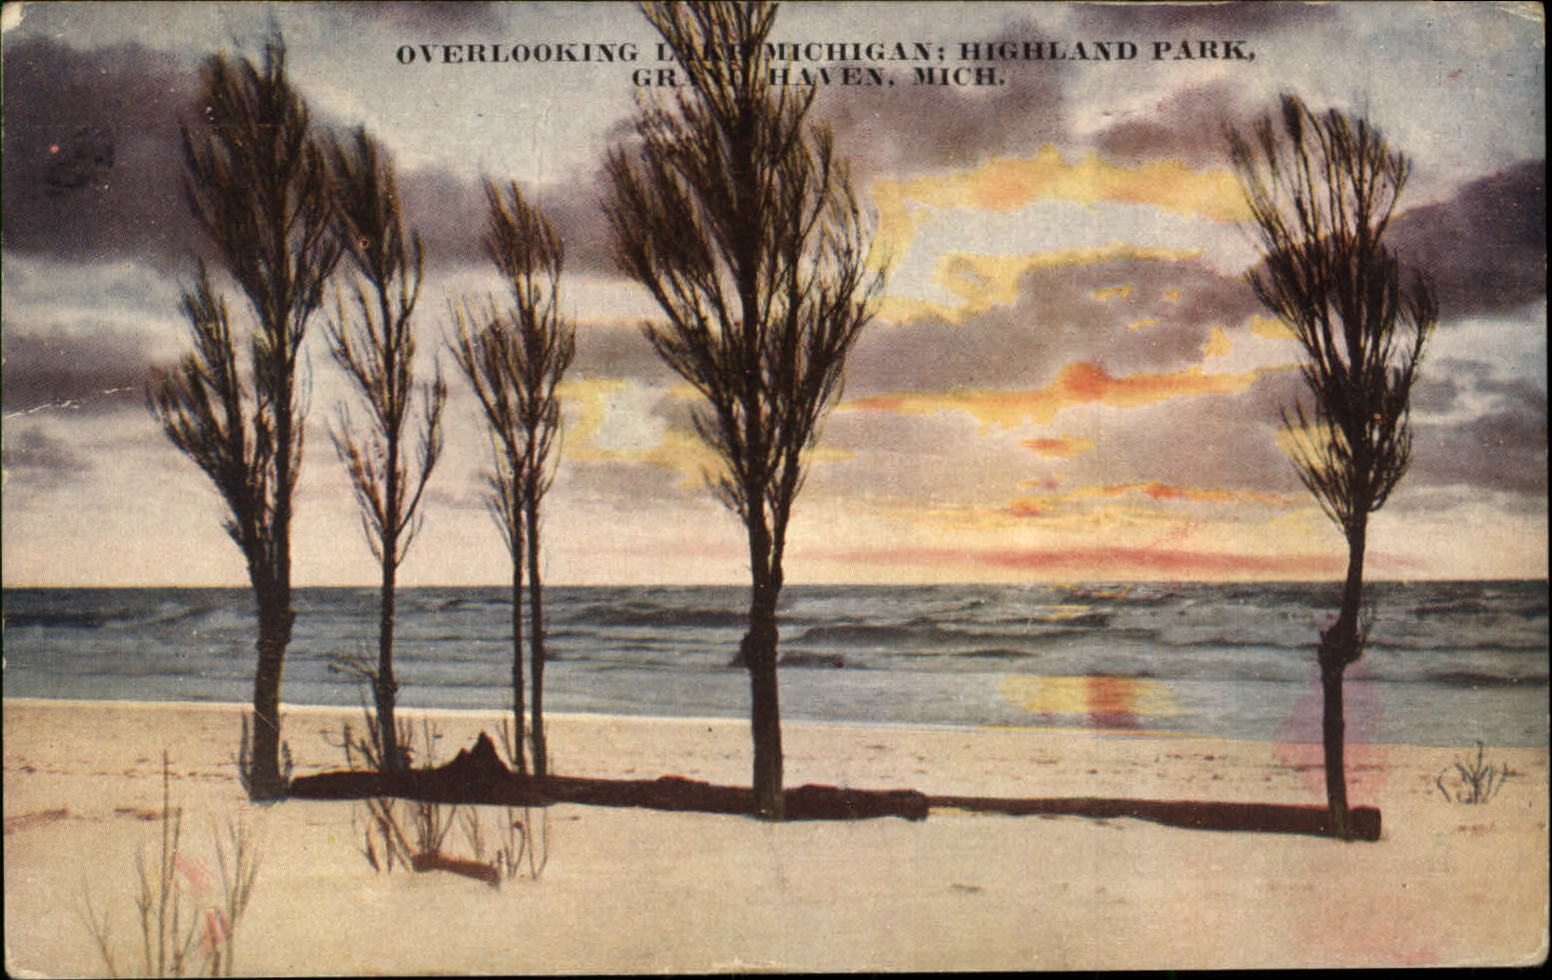 Grand Haven MI Highland Park Lake Michigan mailed 1922 postcard